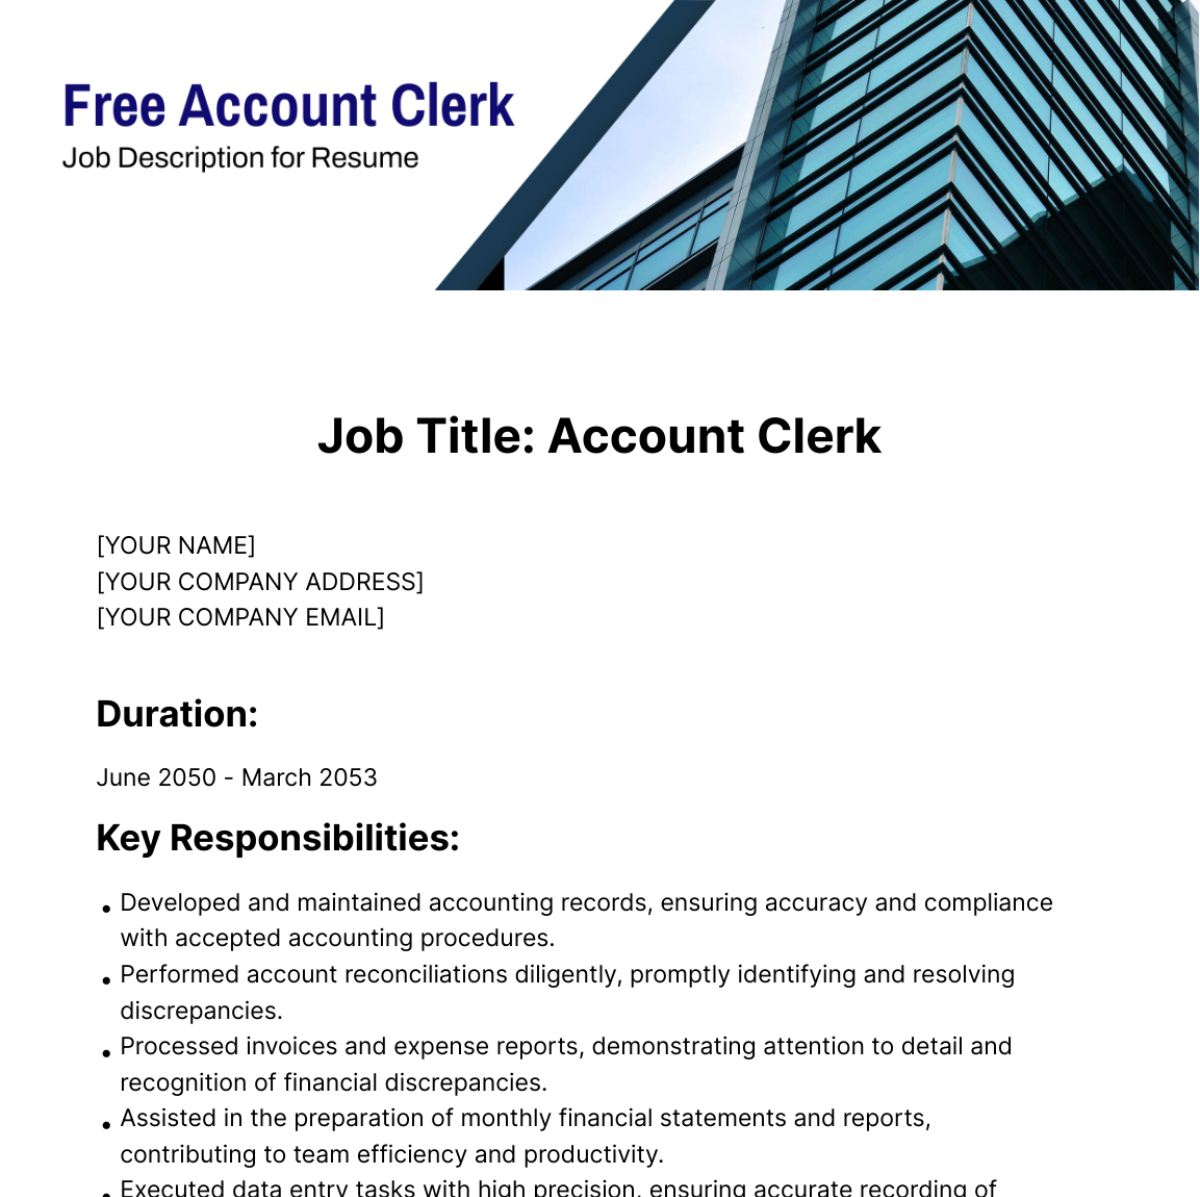 Account Clerk Job Description for Resume Template